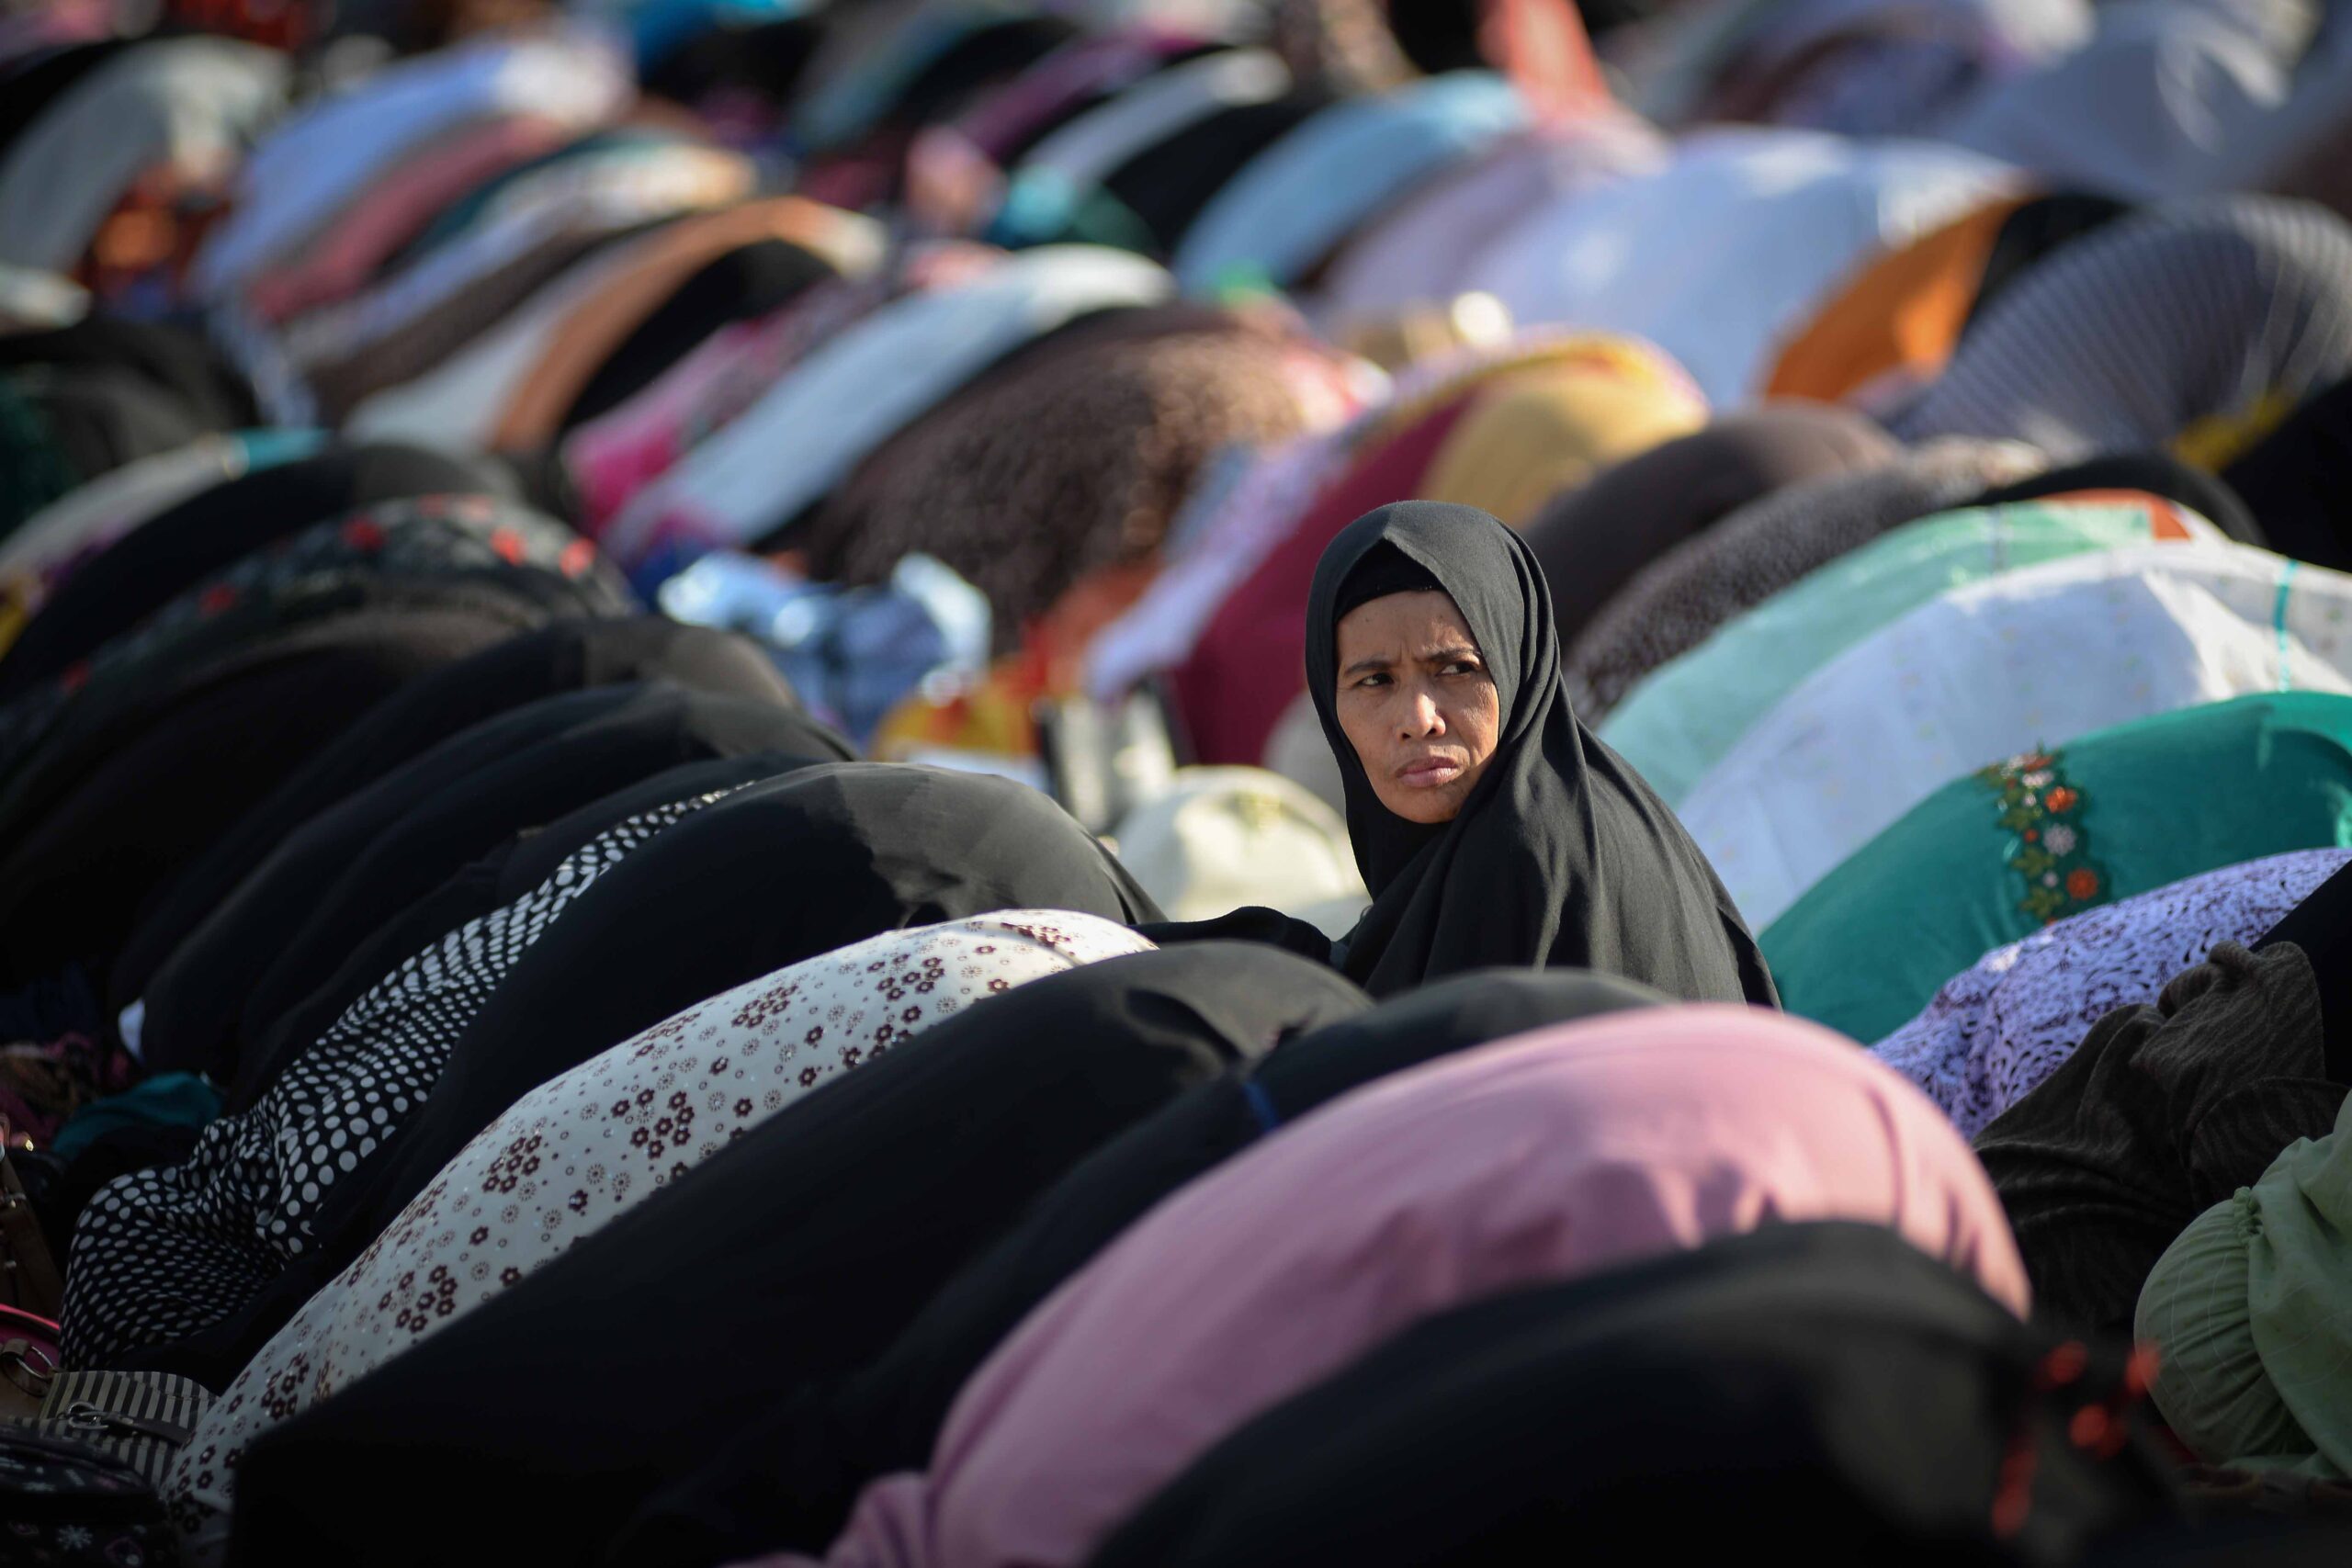 On Eid’l Adha, Filipino Muslims pray for strength amid prejudice